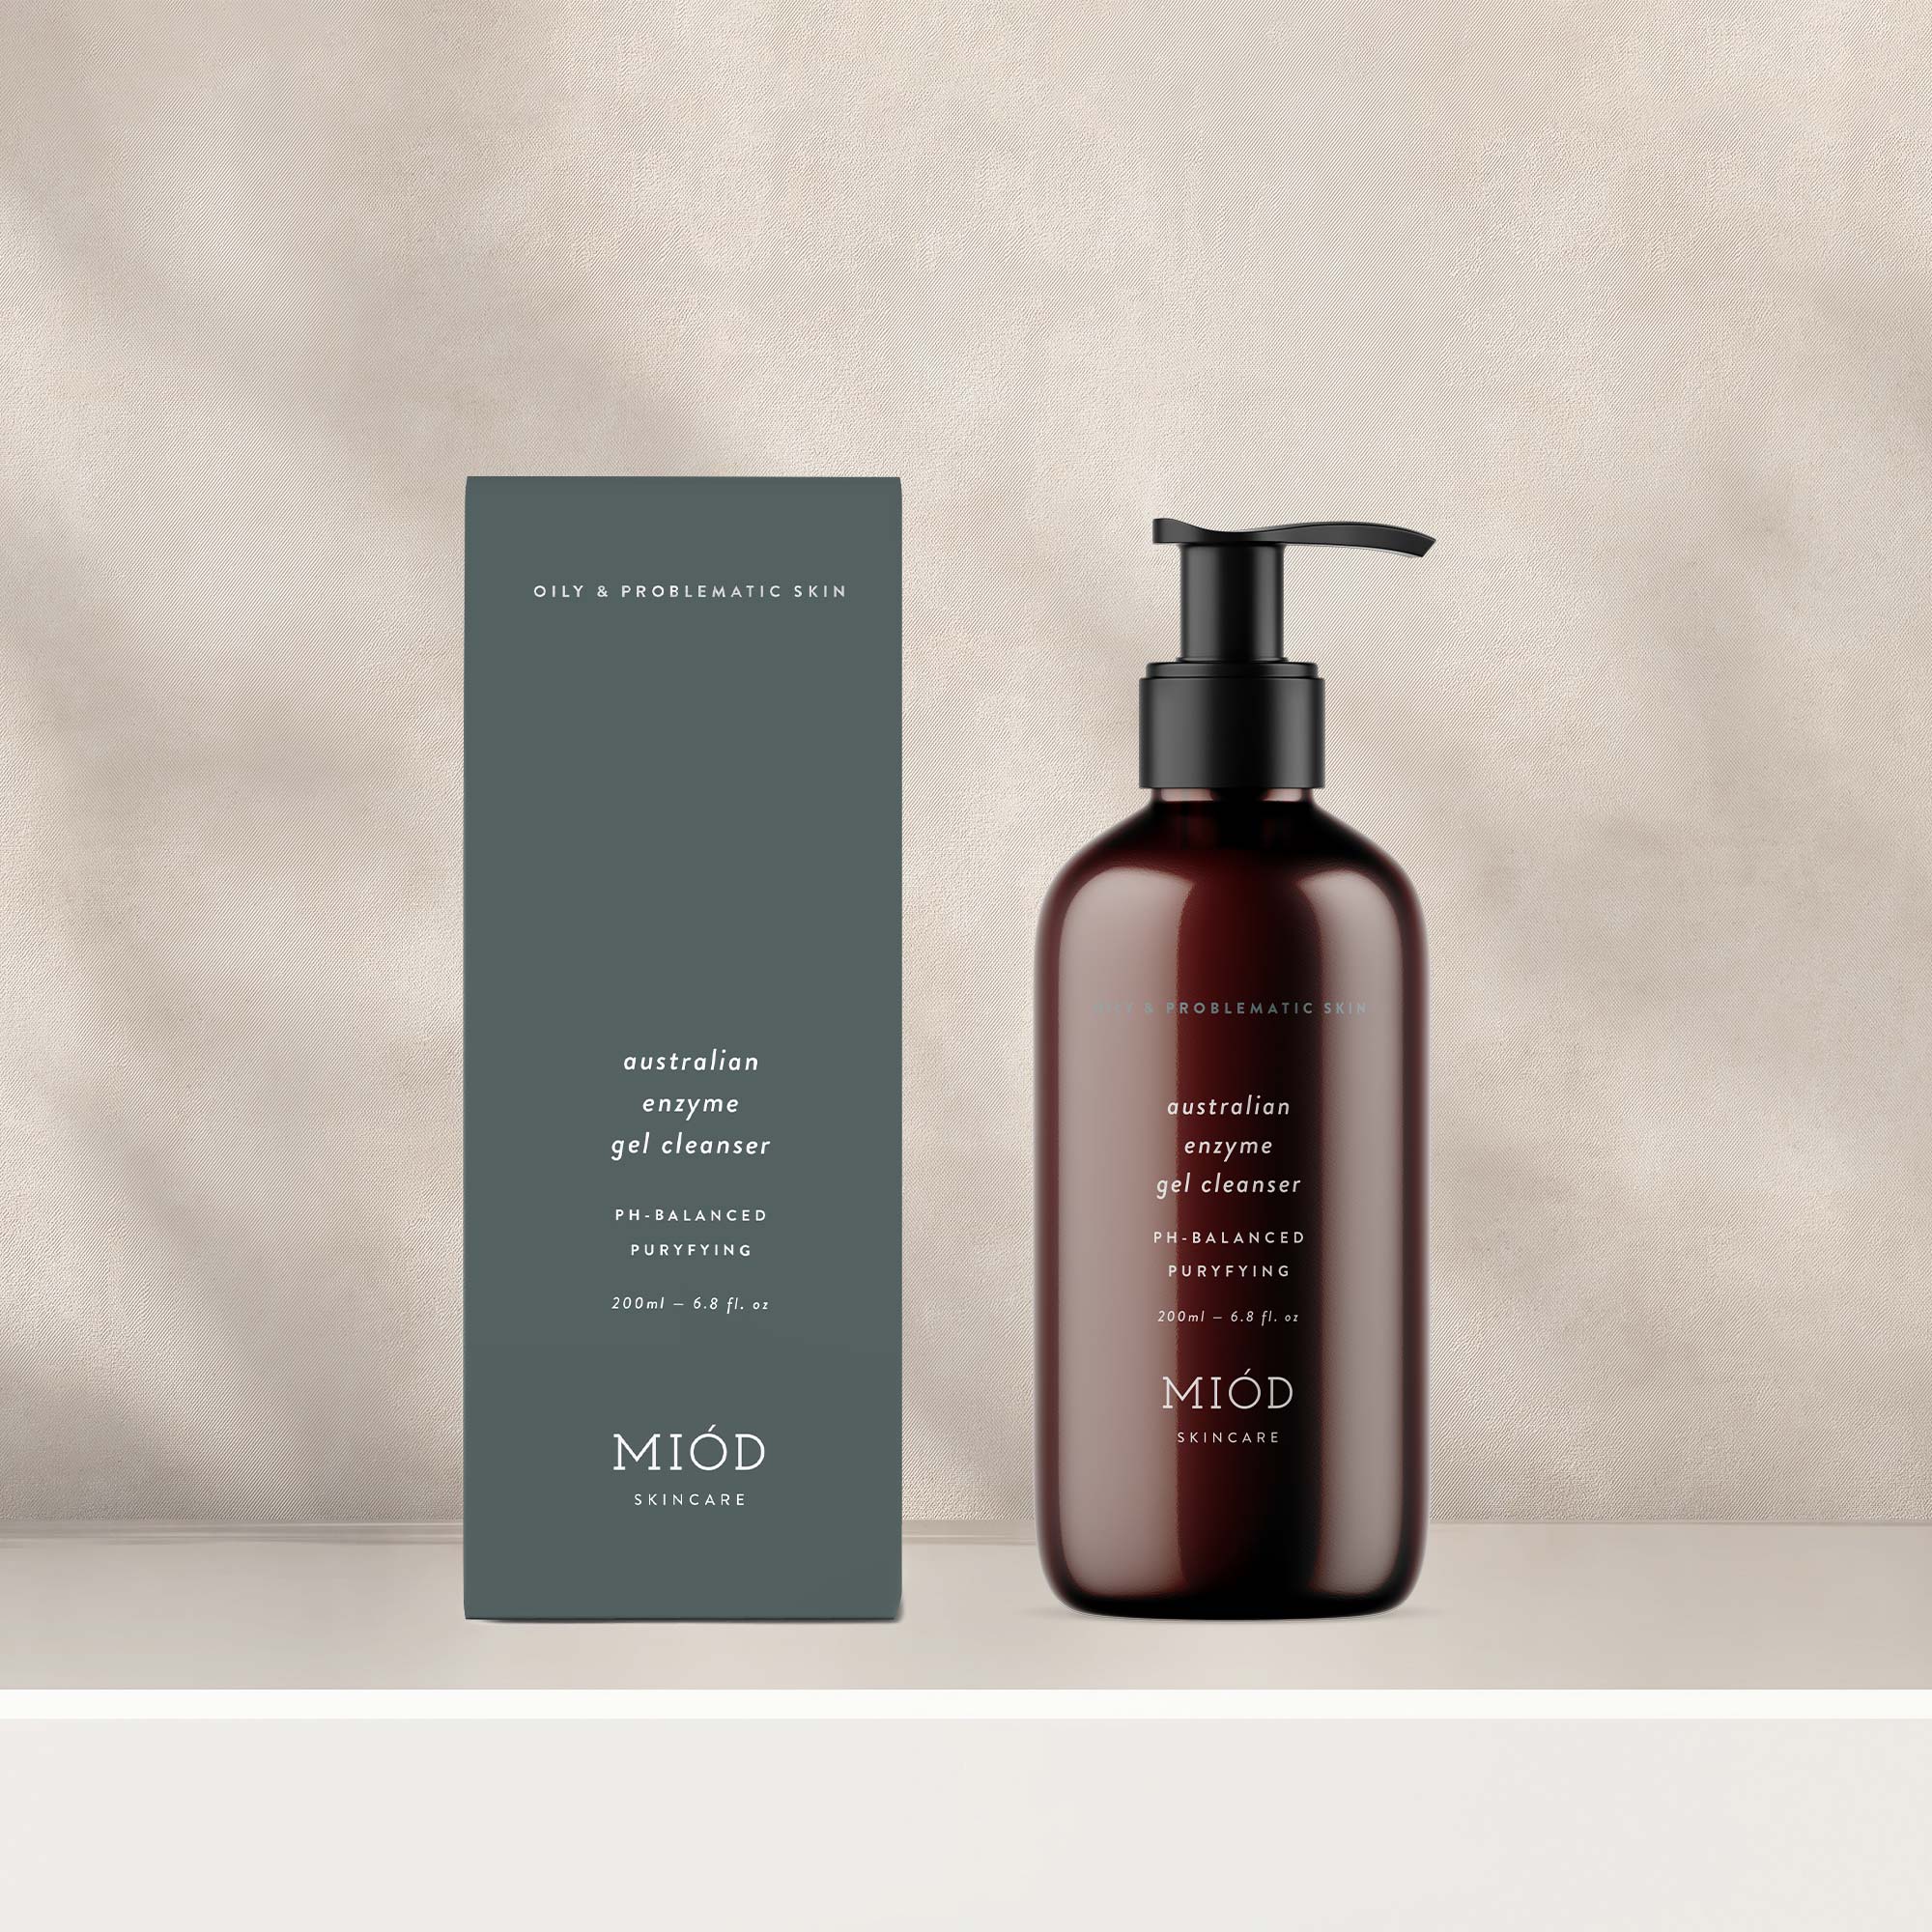 Karolina Król Studio Miód Skincare clean minimalist packaging design for gel cleanser